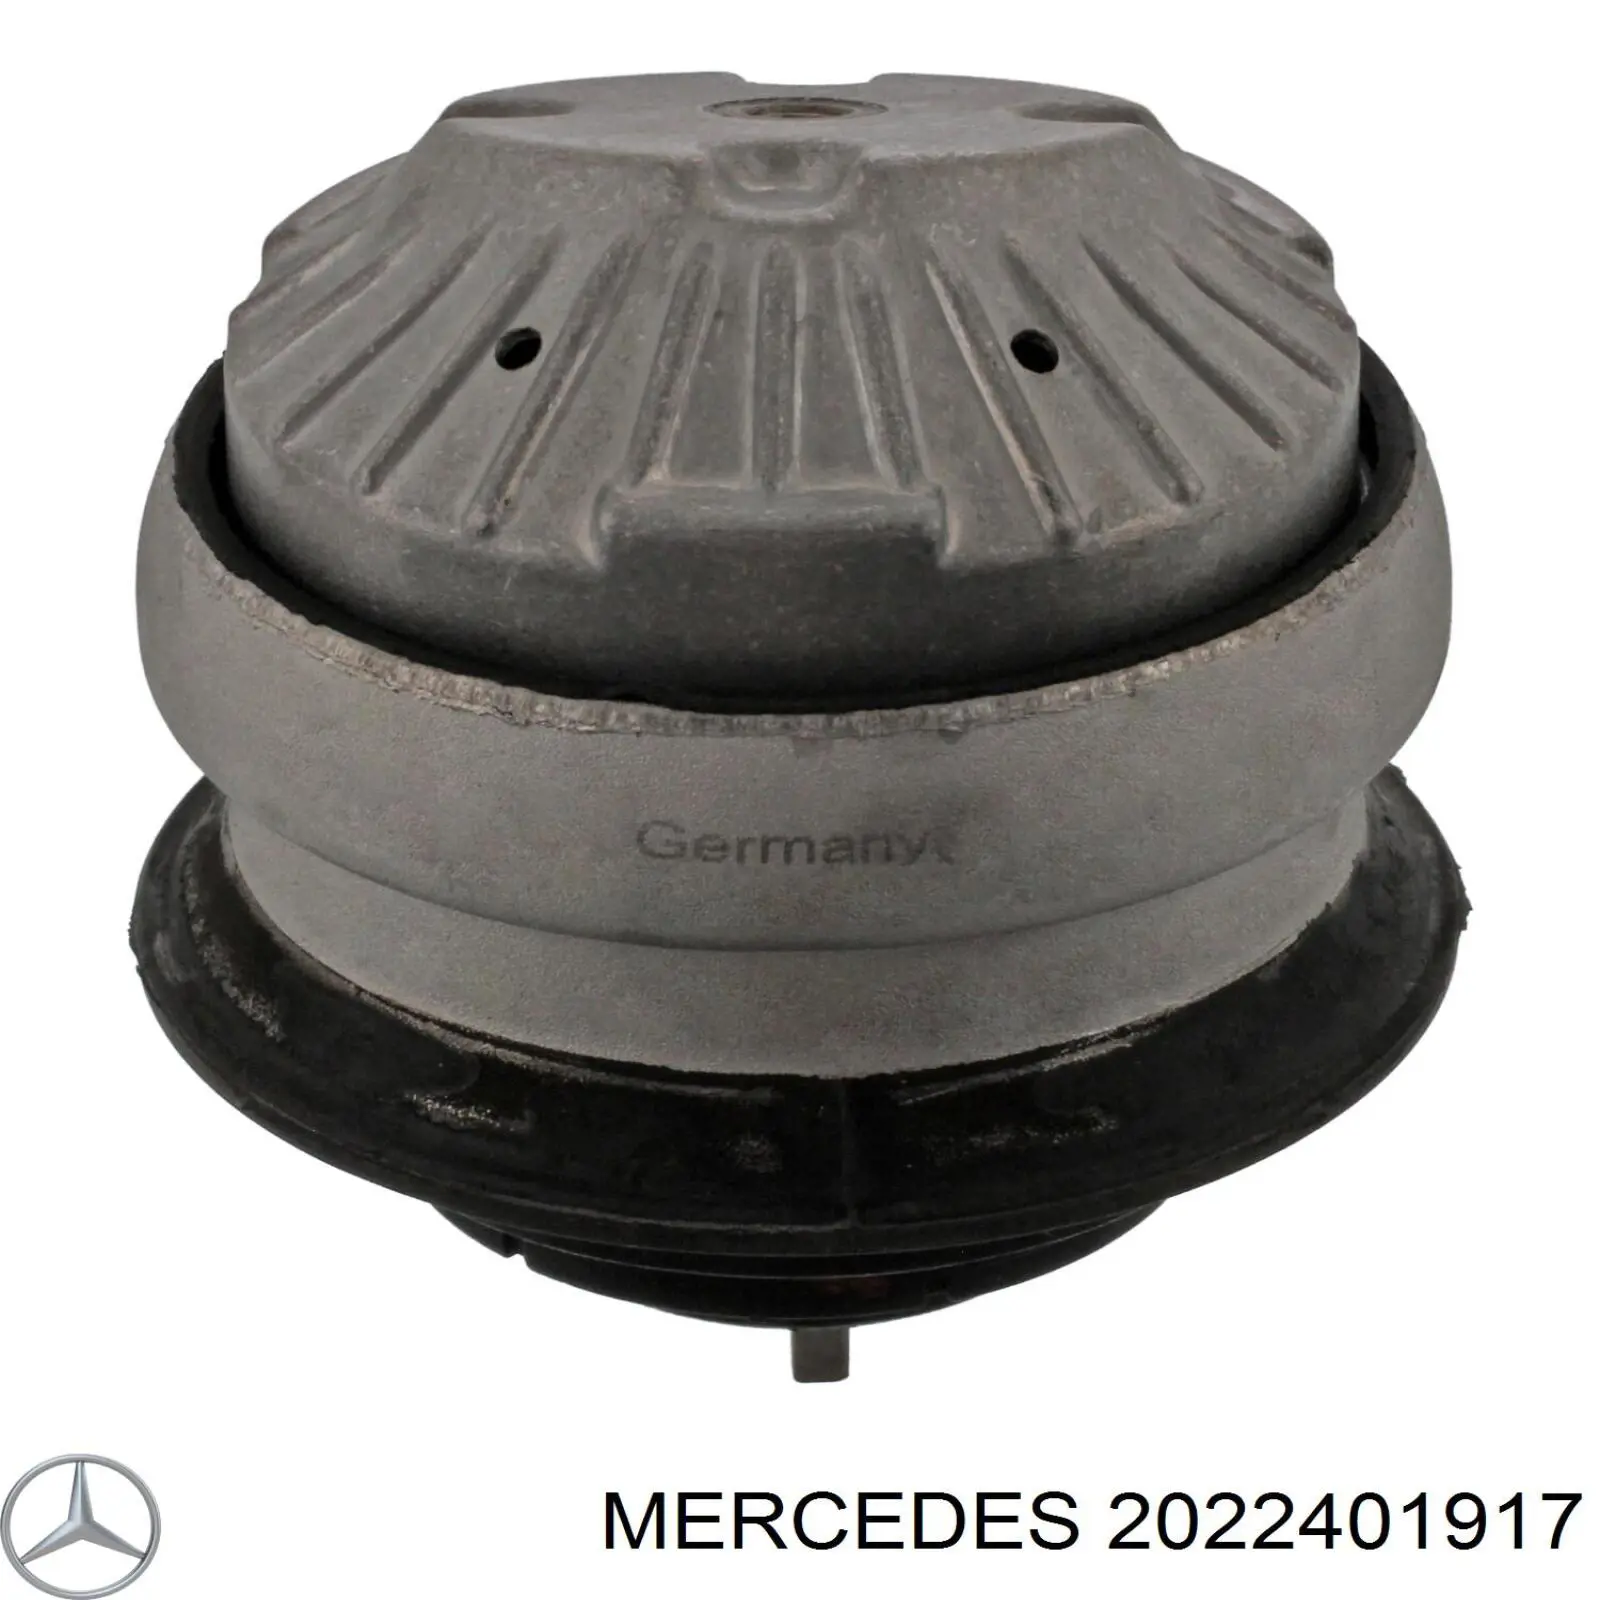 2022401917 Mercedes подушка (опора двигателя левая)